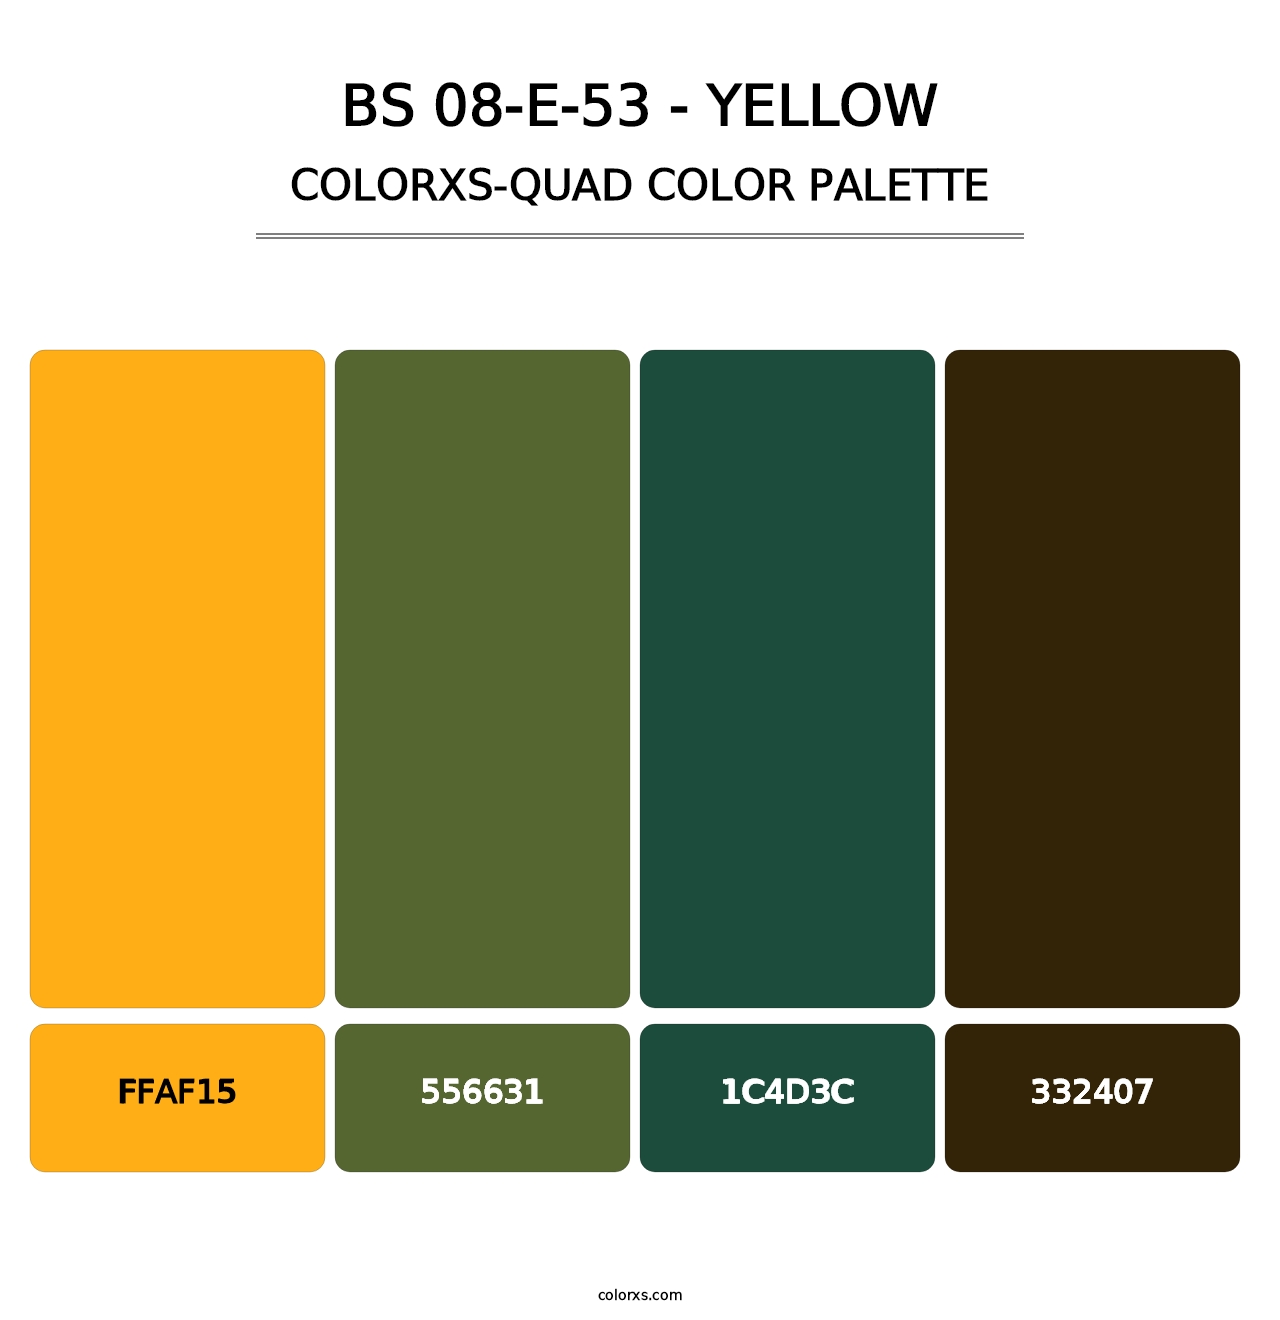 BS 08-E-53 - Yellow - Colorxs Quad Palette